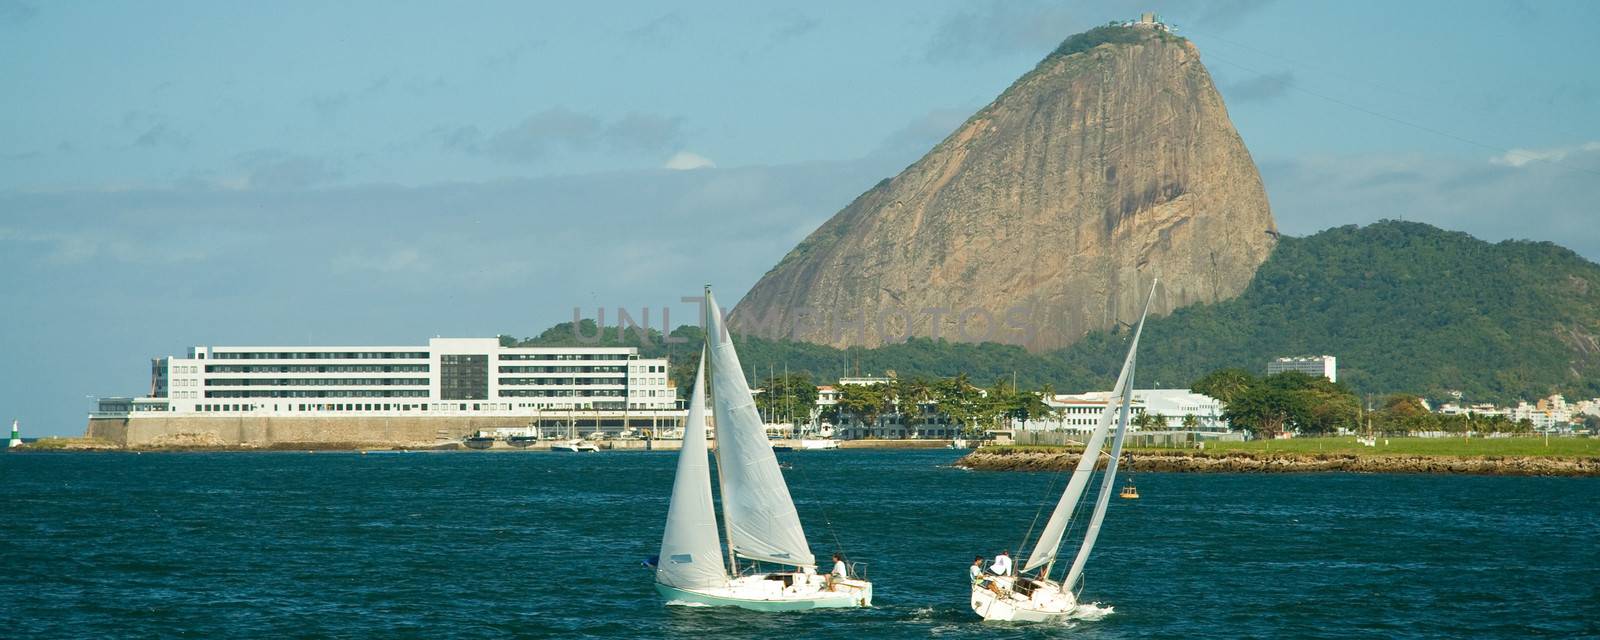 Sailboats in front of Sugarloaf Mountain, Rio De Janeiro, Brazil